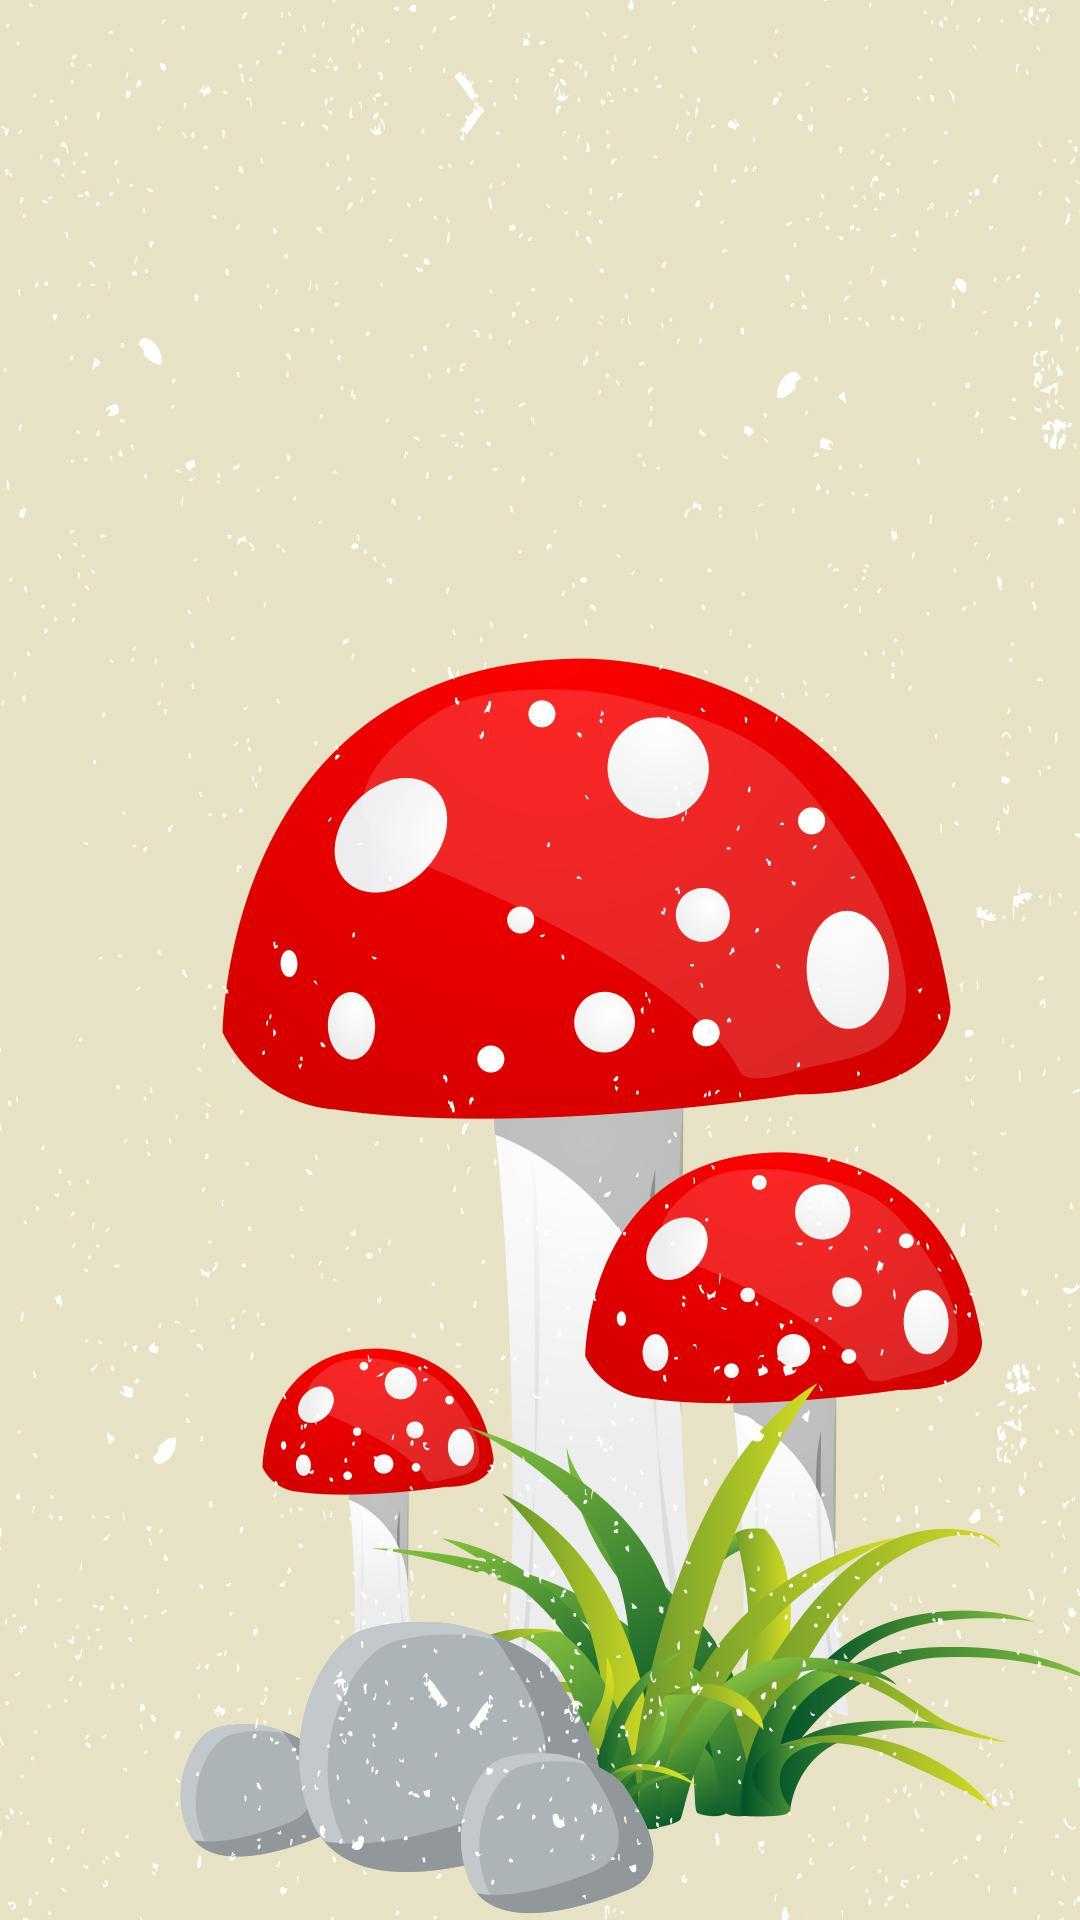 Mushroom background Vectors  Illustrations for Free Download  Freepik